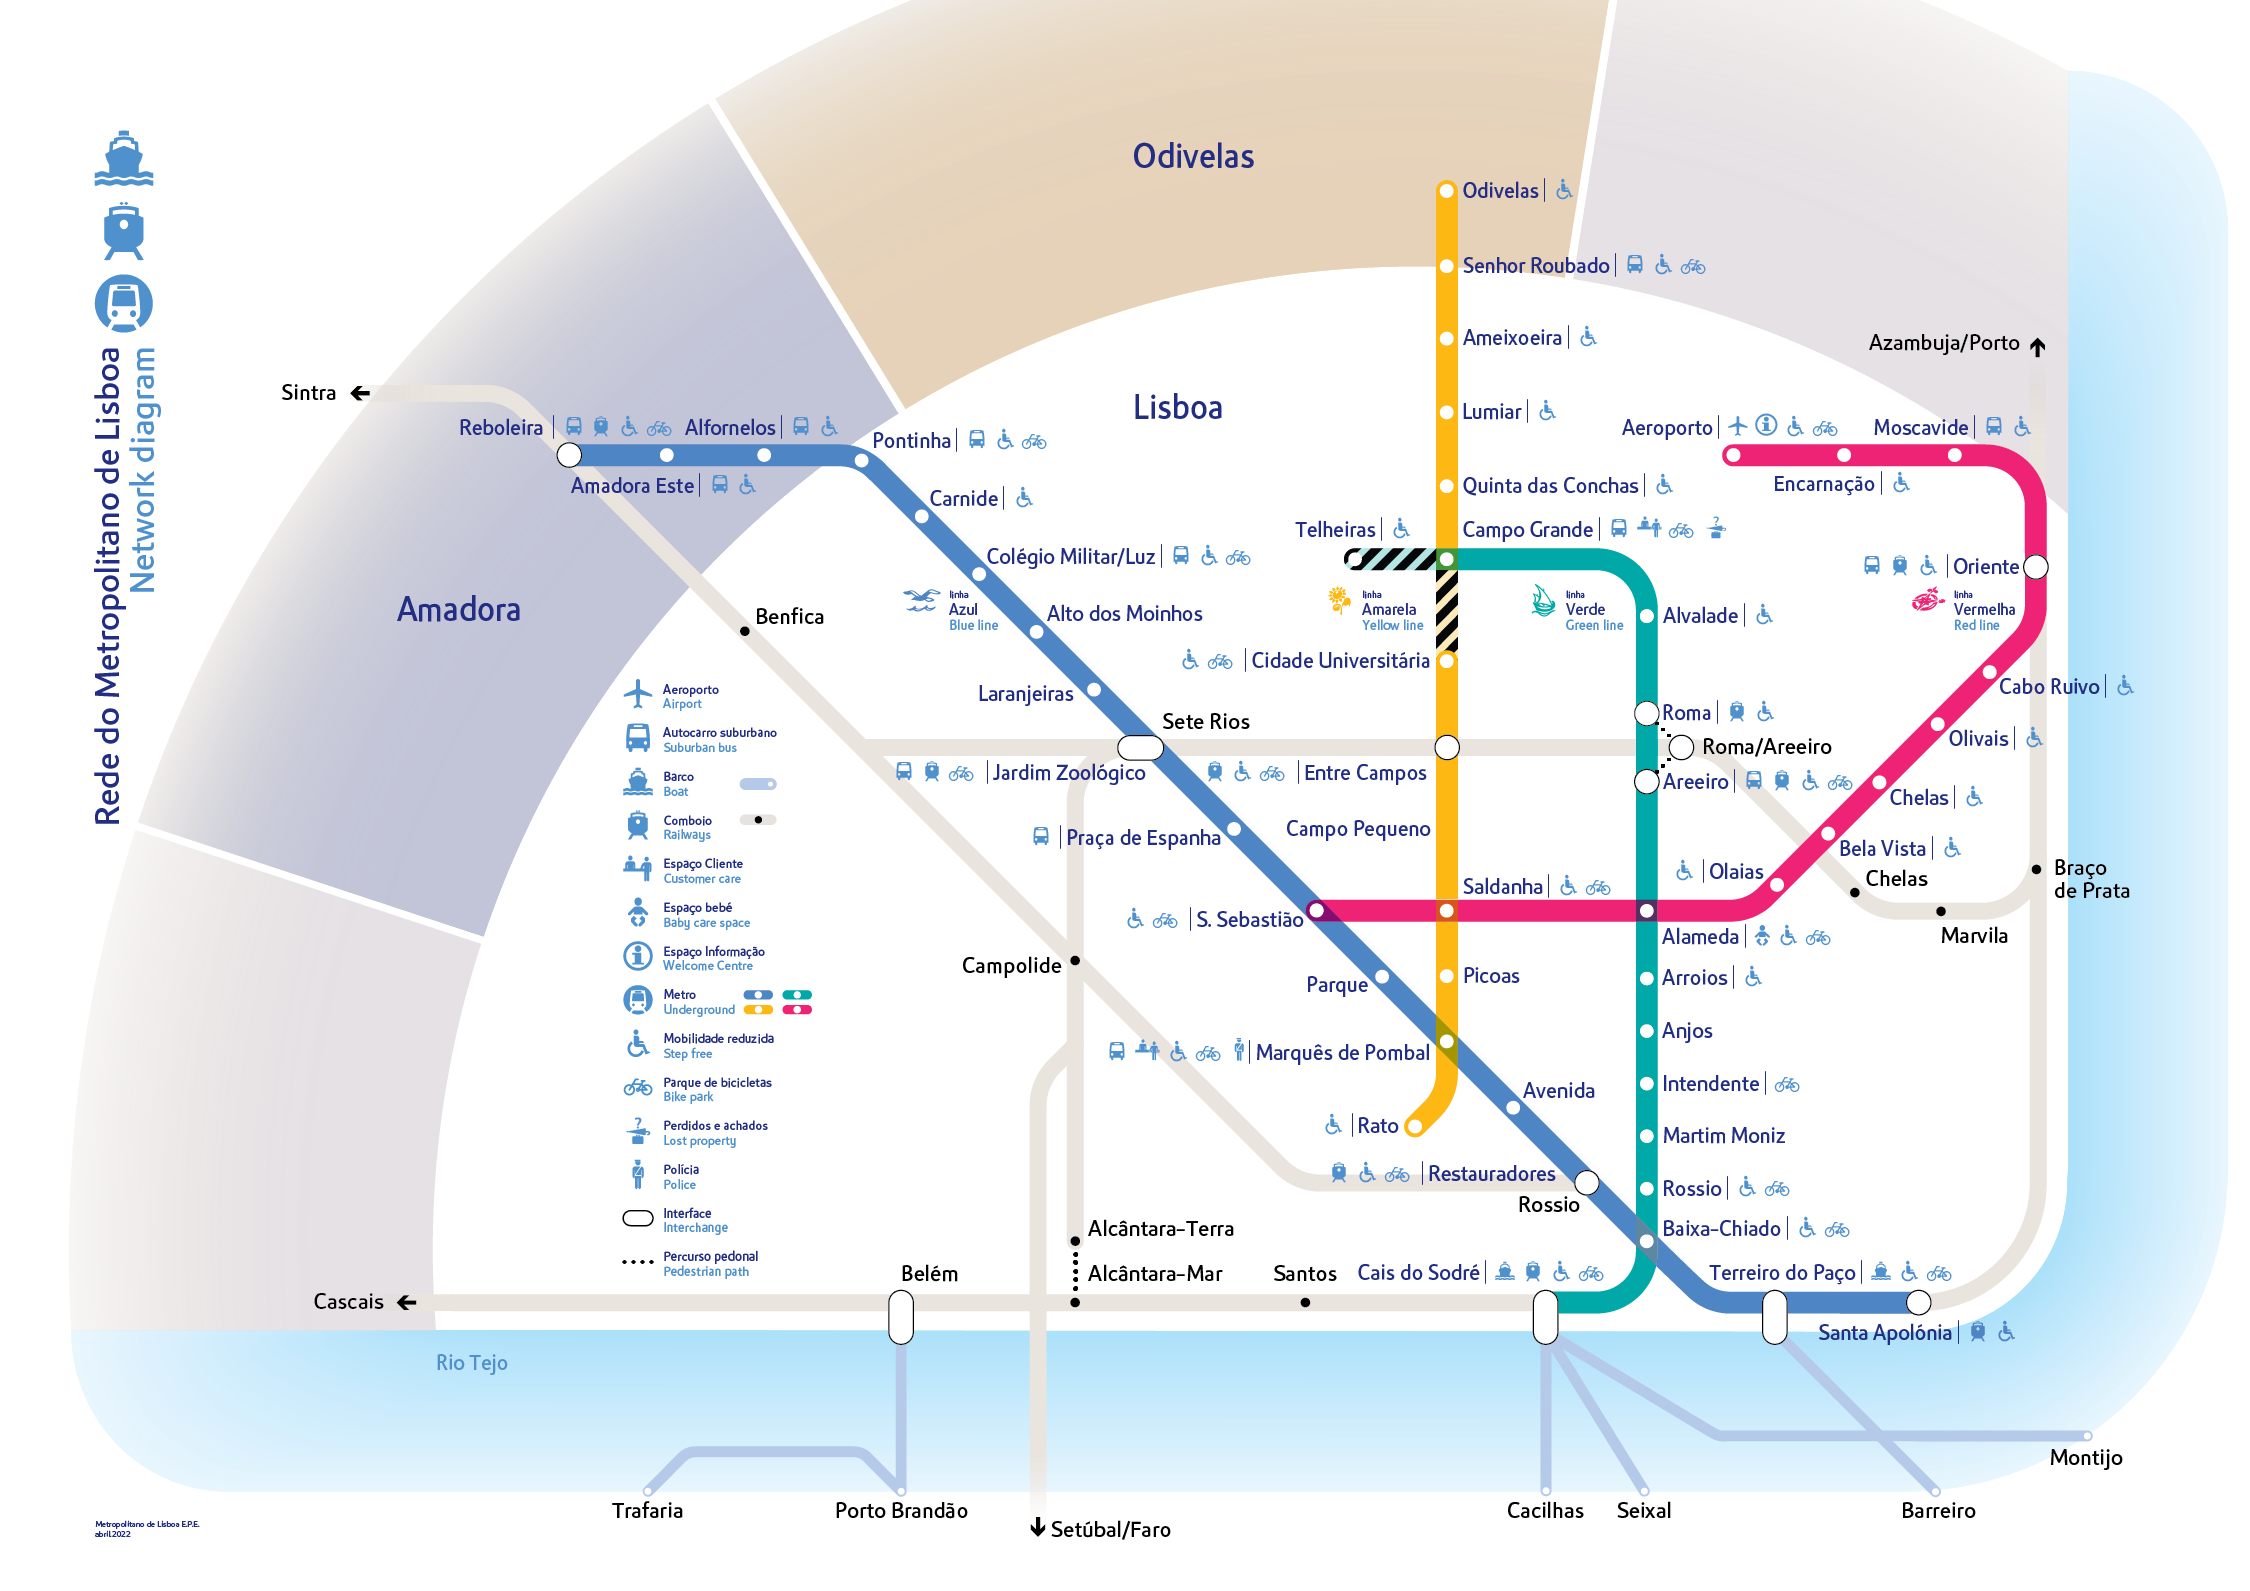 Metro network diagram